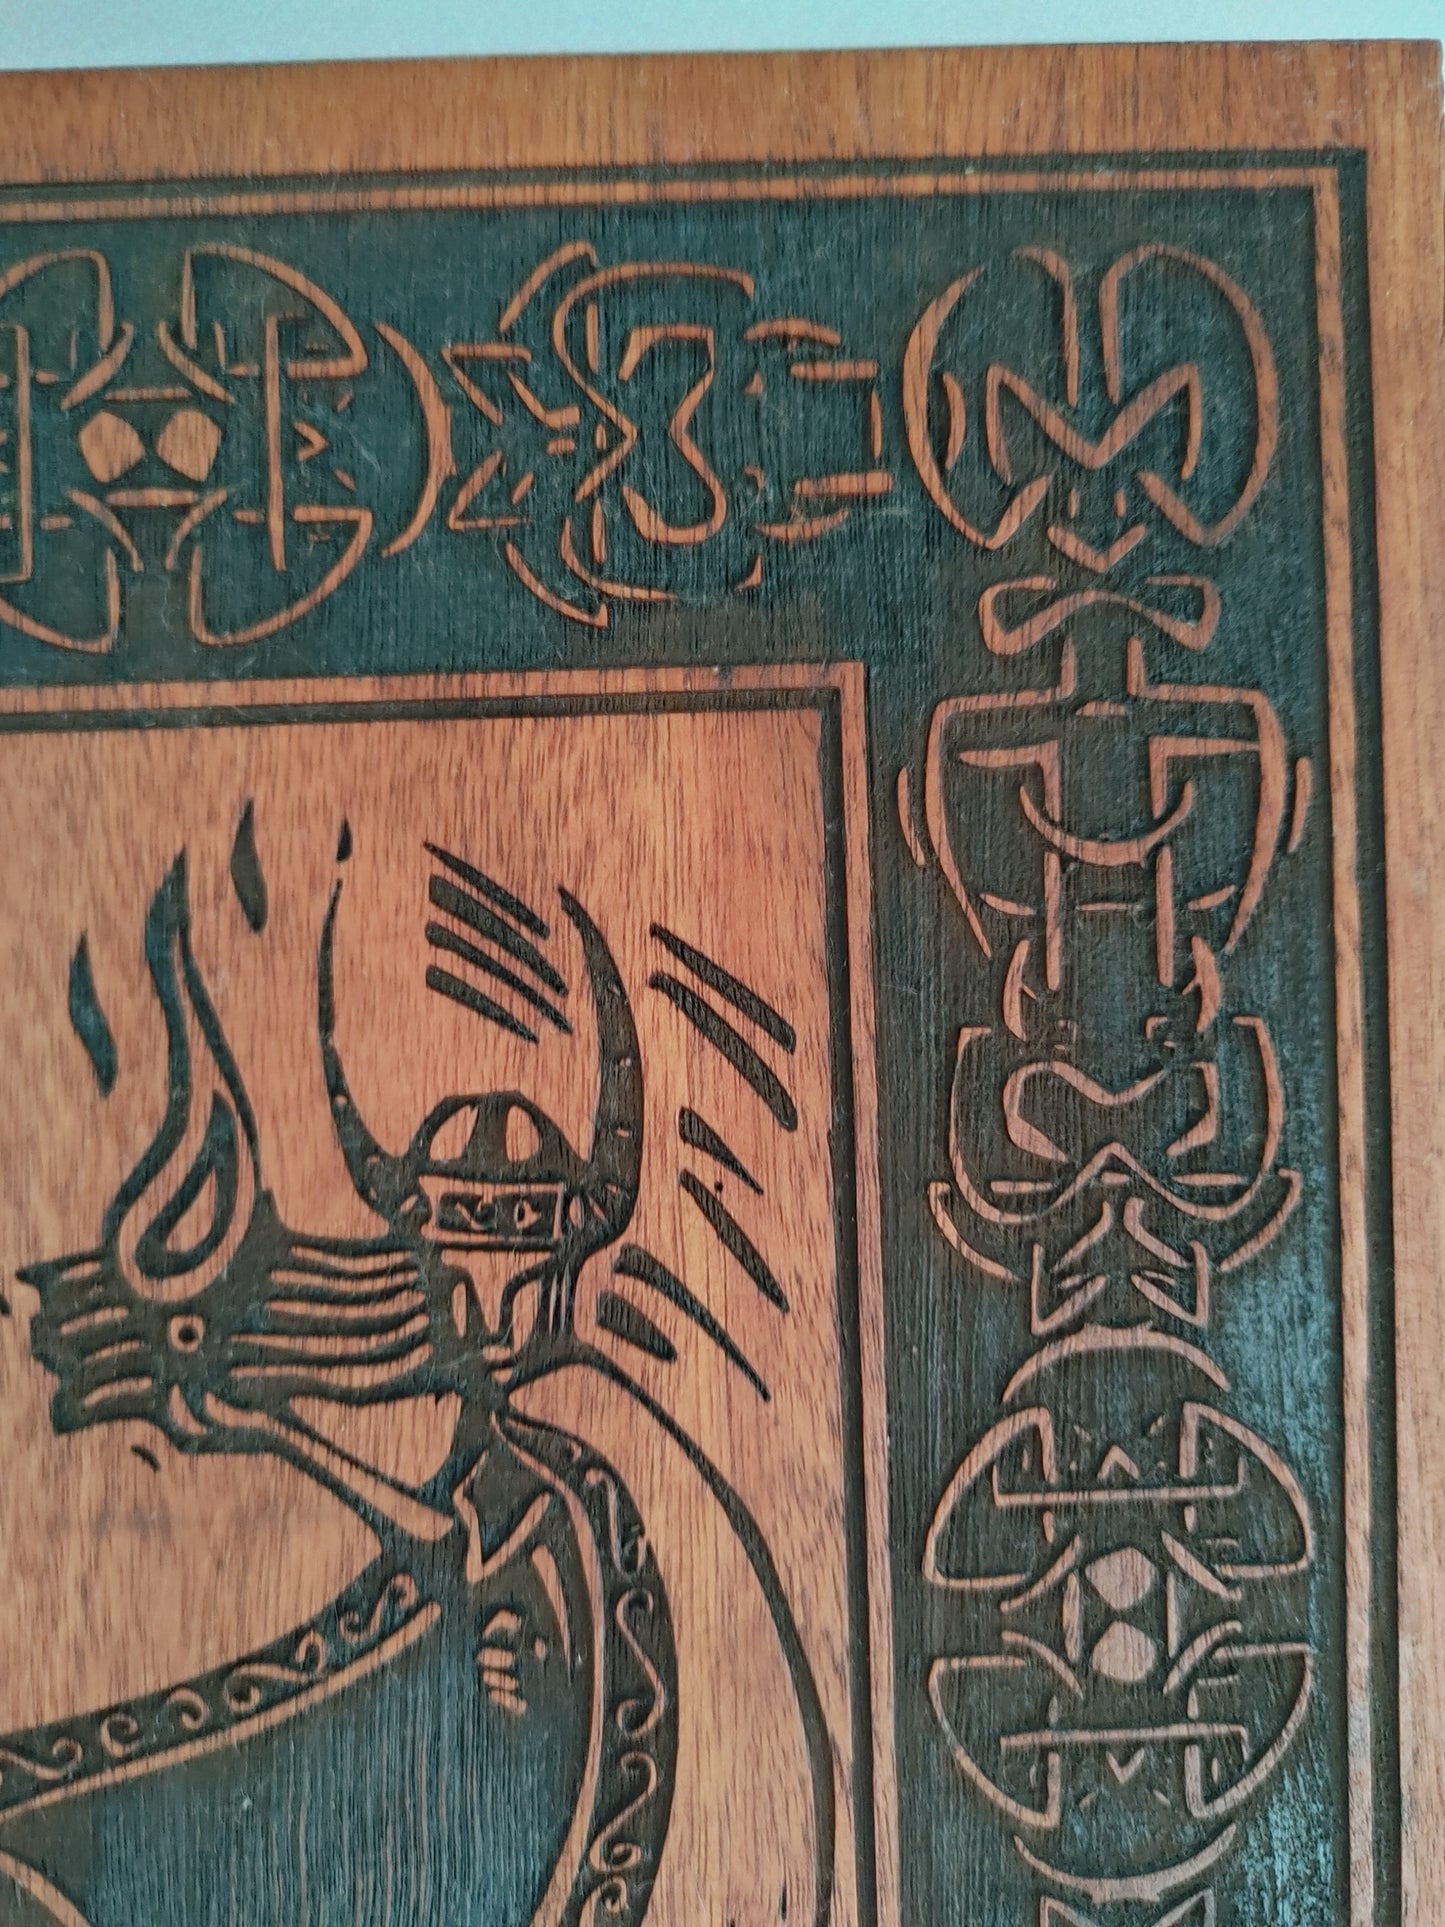 Loki Norse God Wood Art Sign